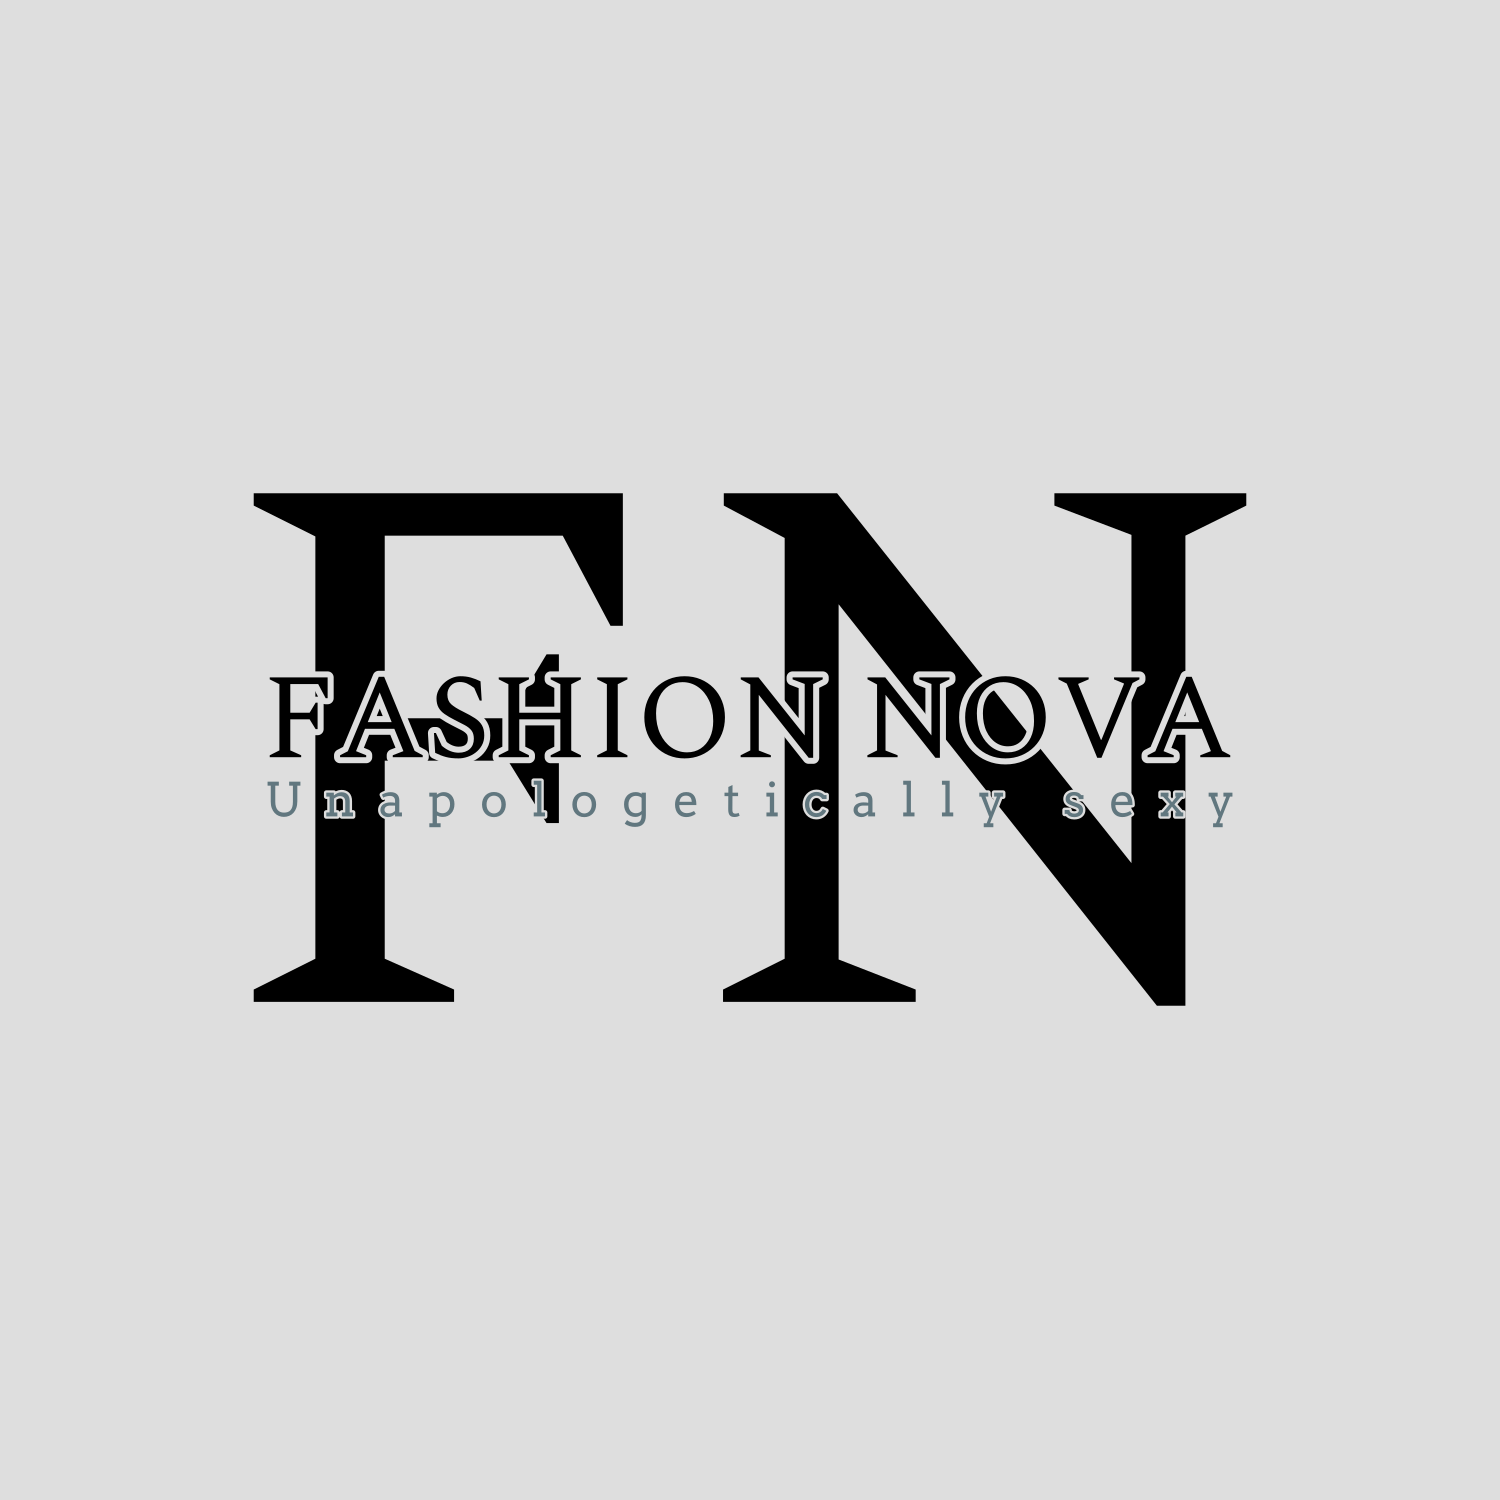 Fashion Nova preview image.